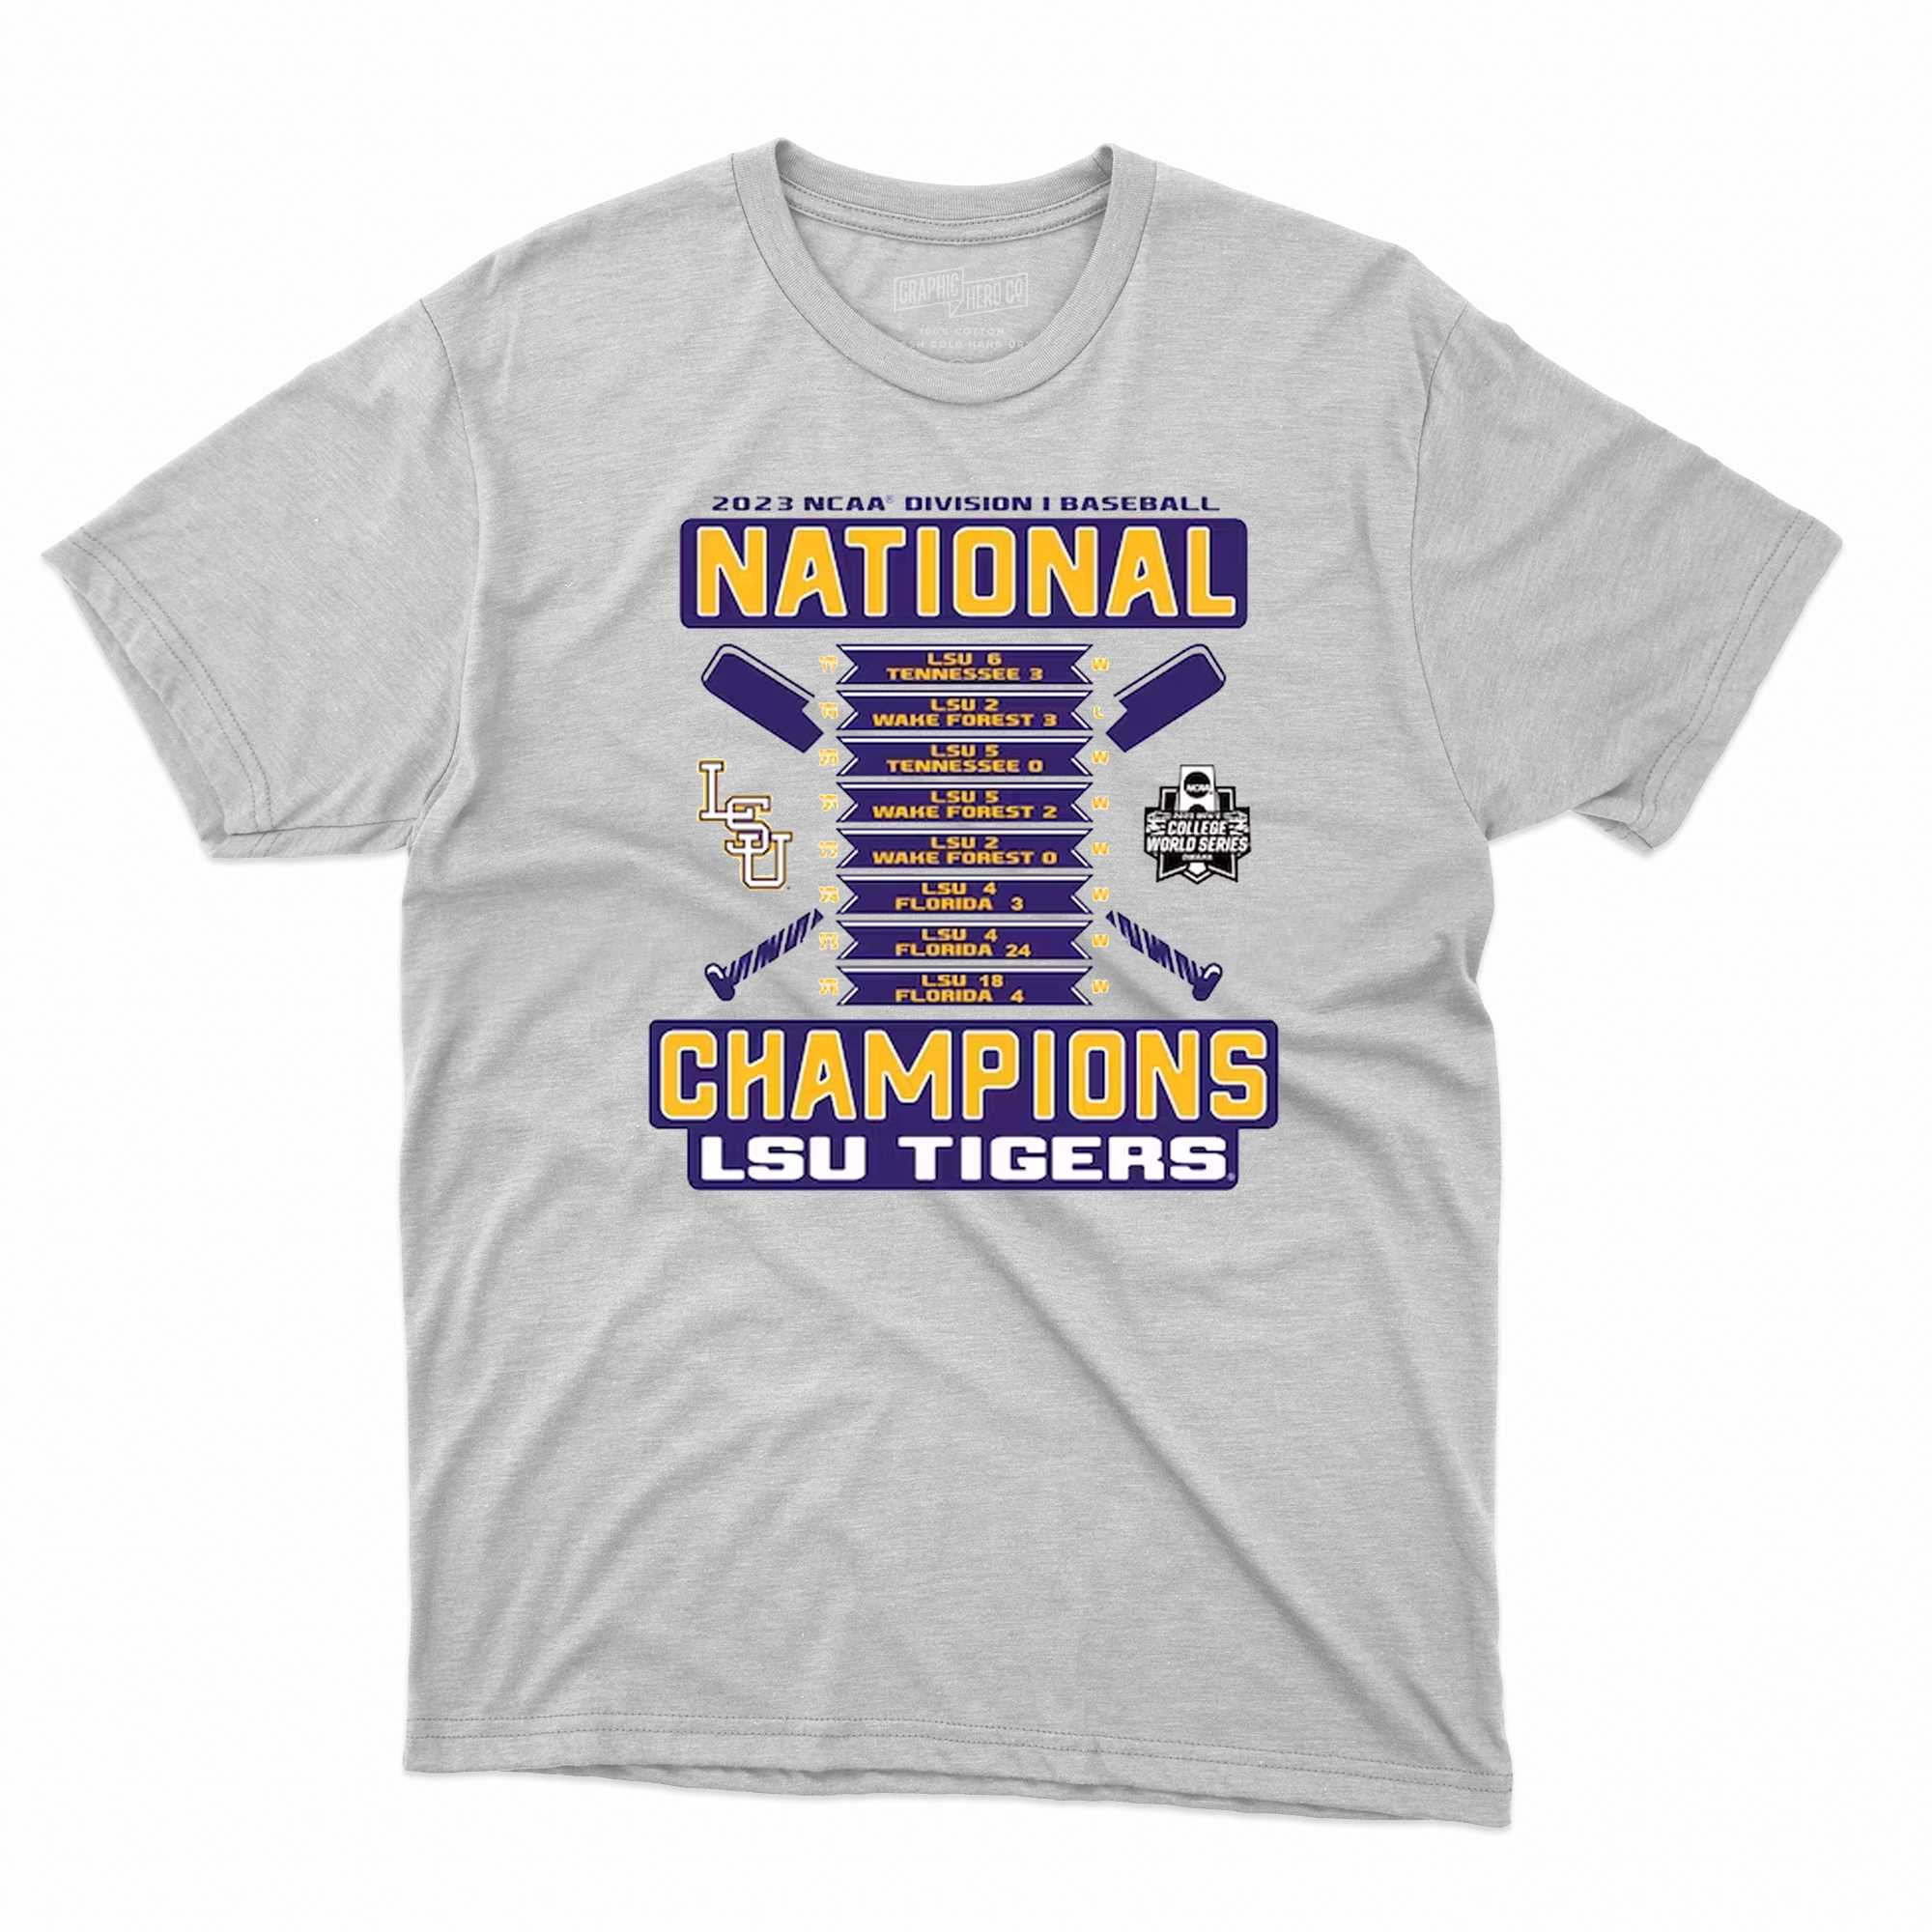 LSU baseball national champions gear: Where to get Tigers shirts